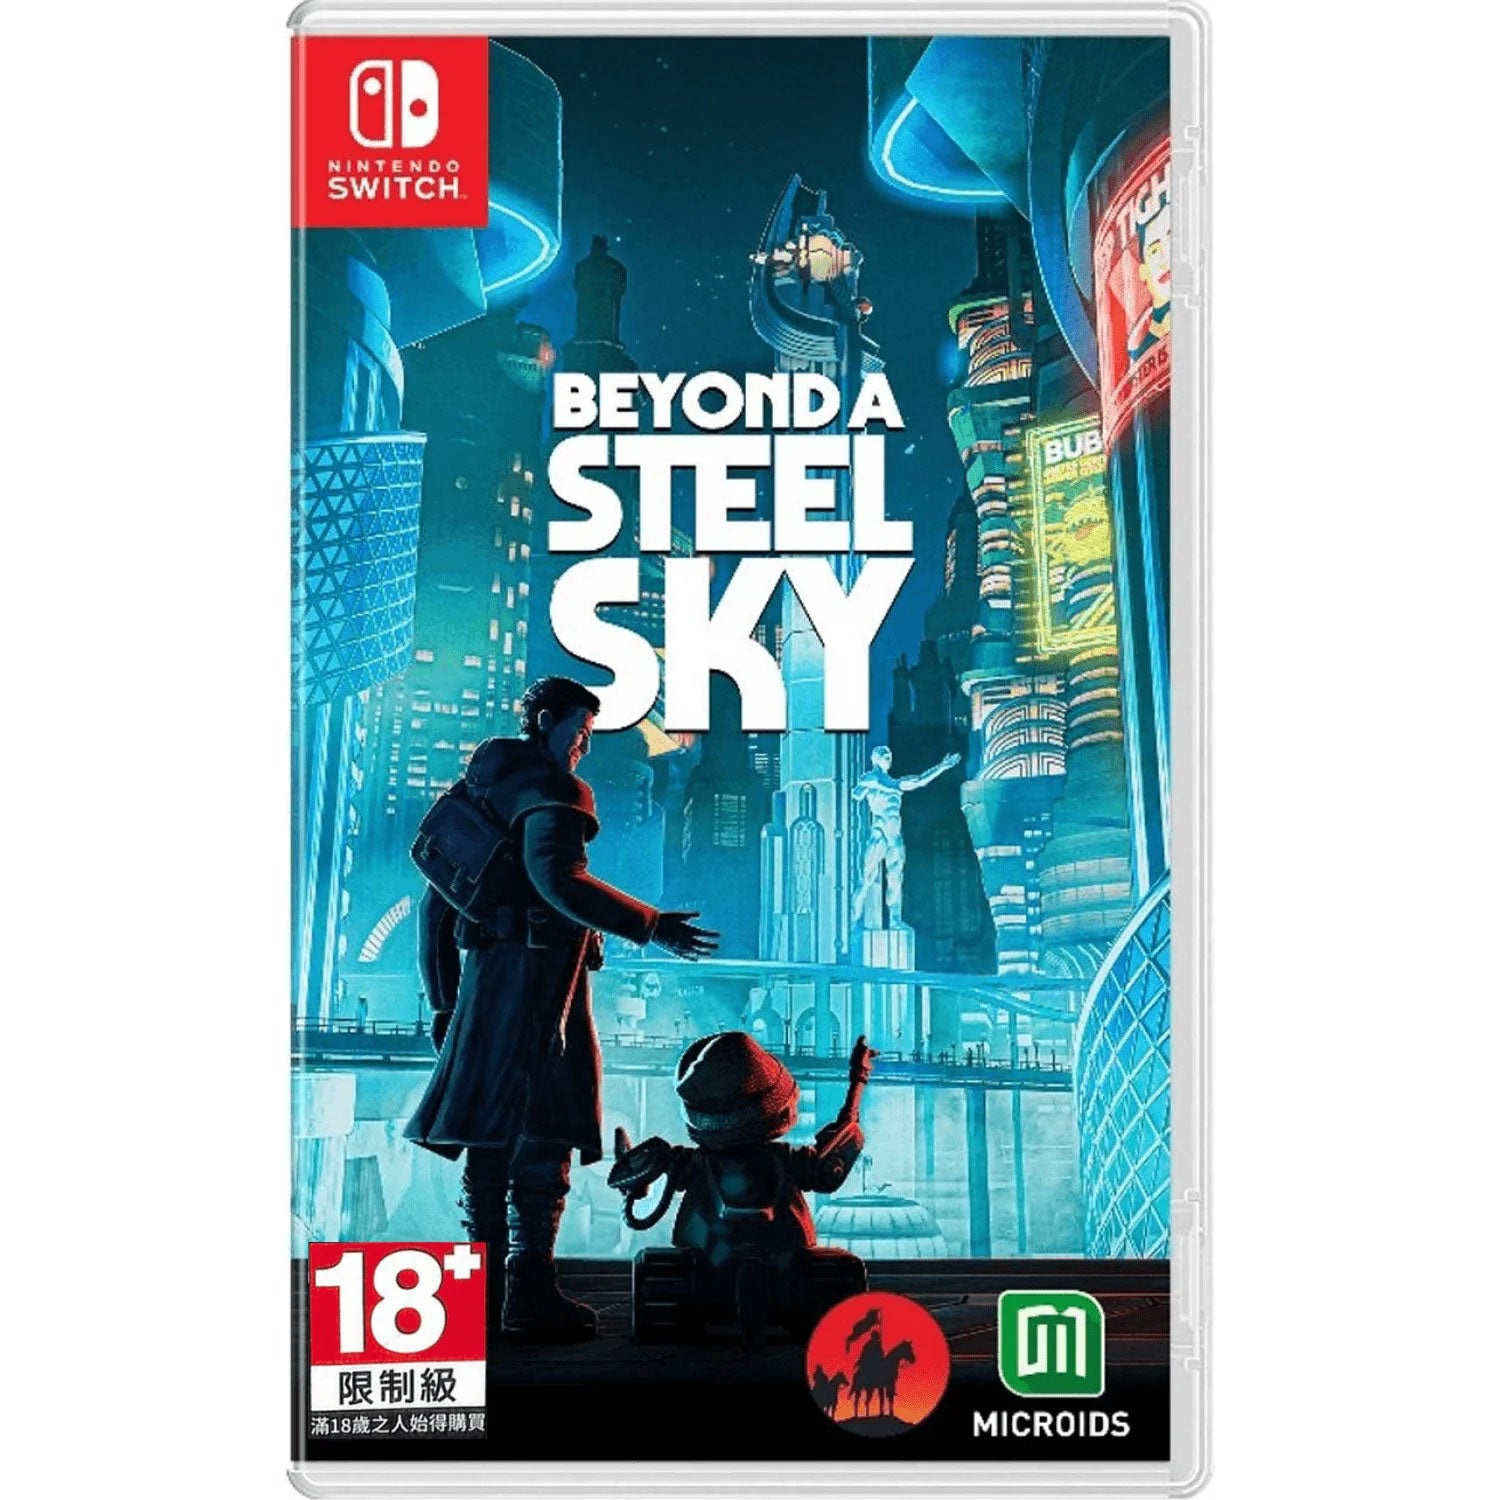 Nintendo Switch Beyond a Steel Sky